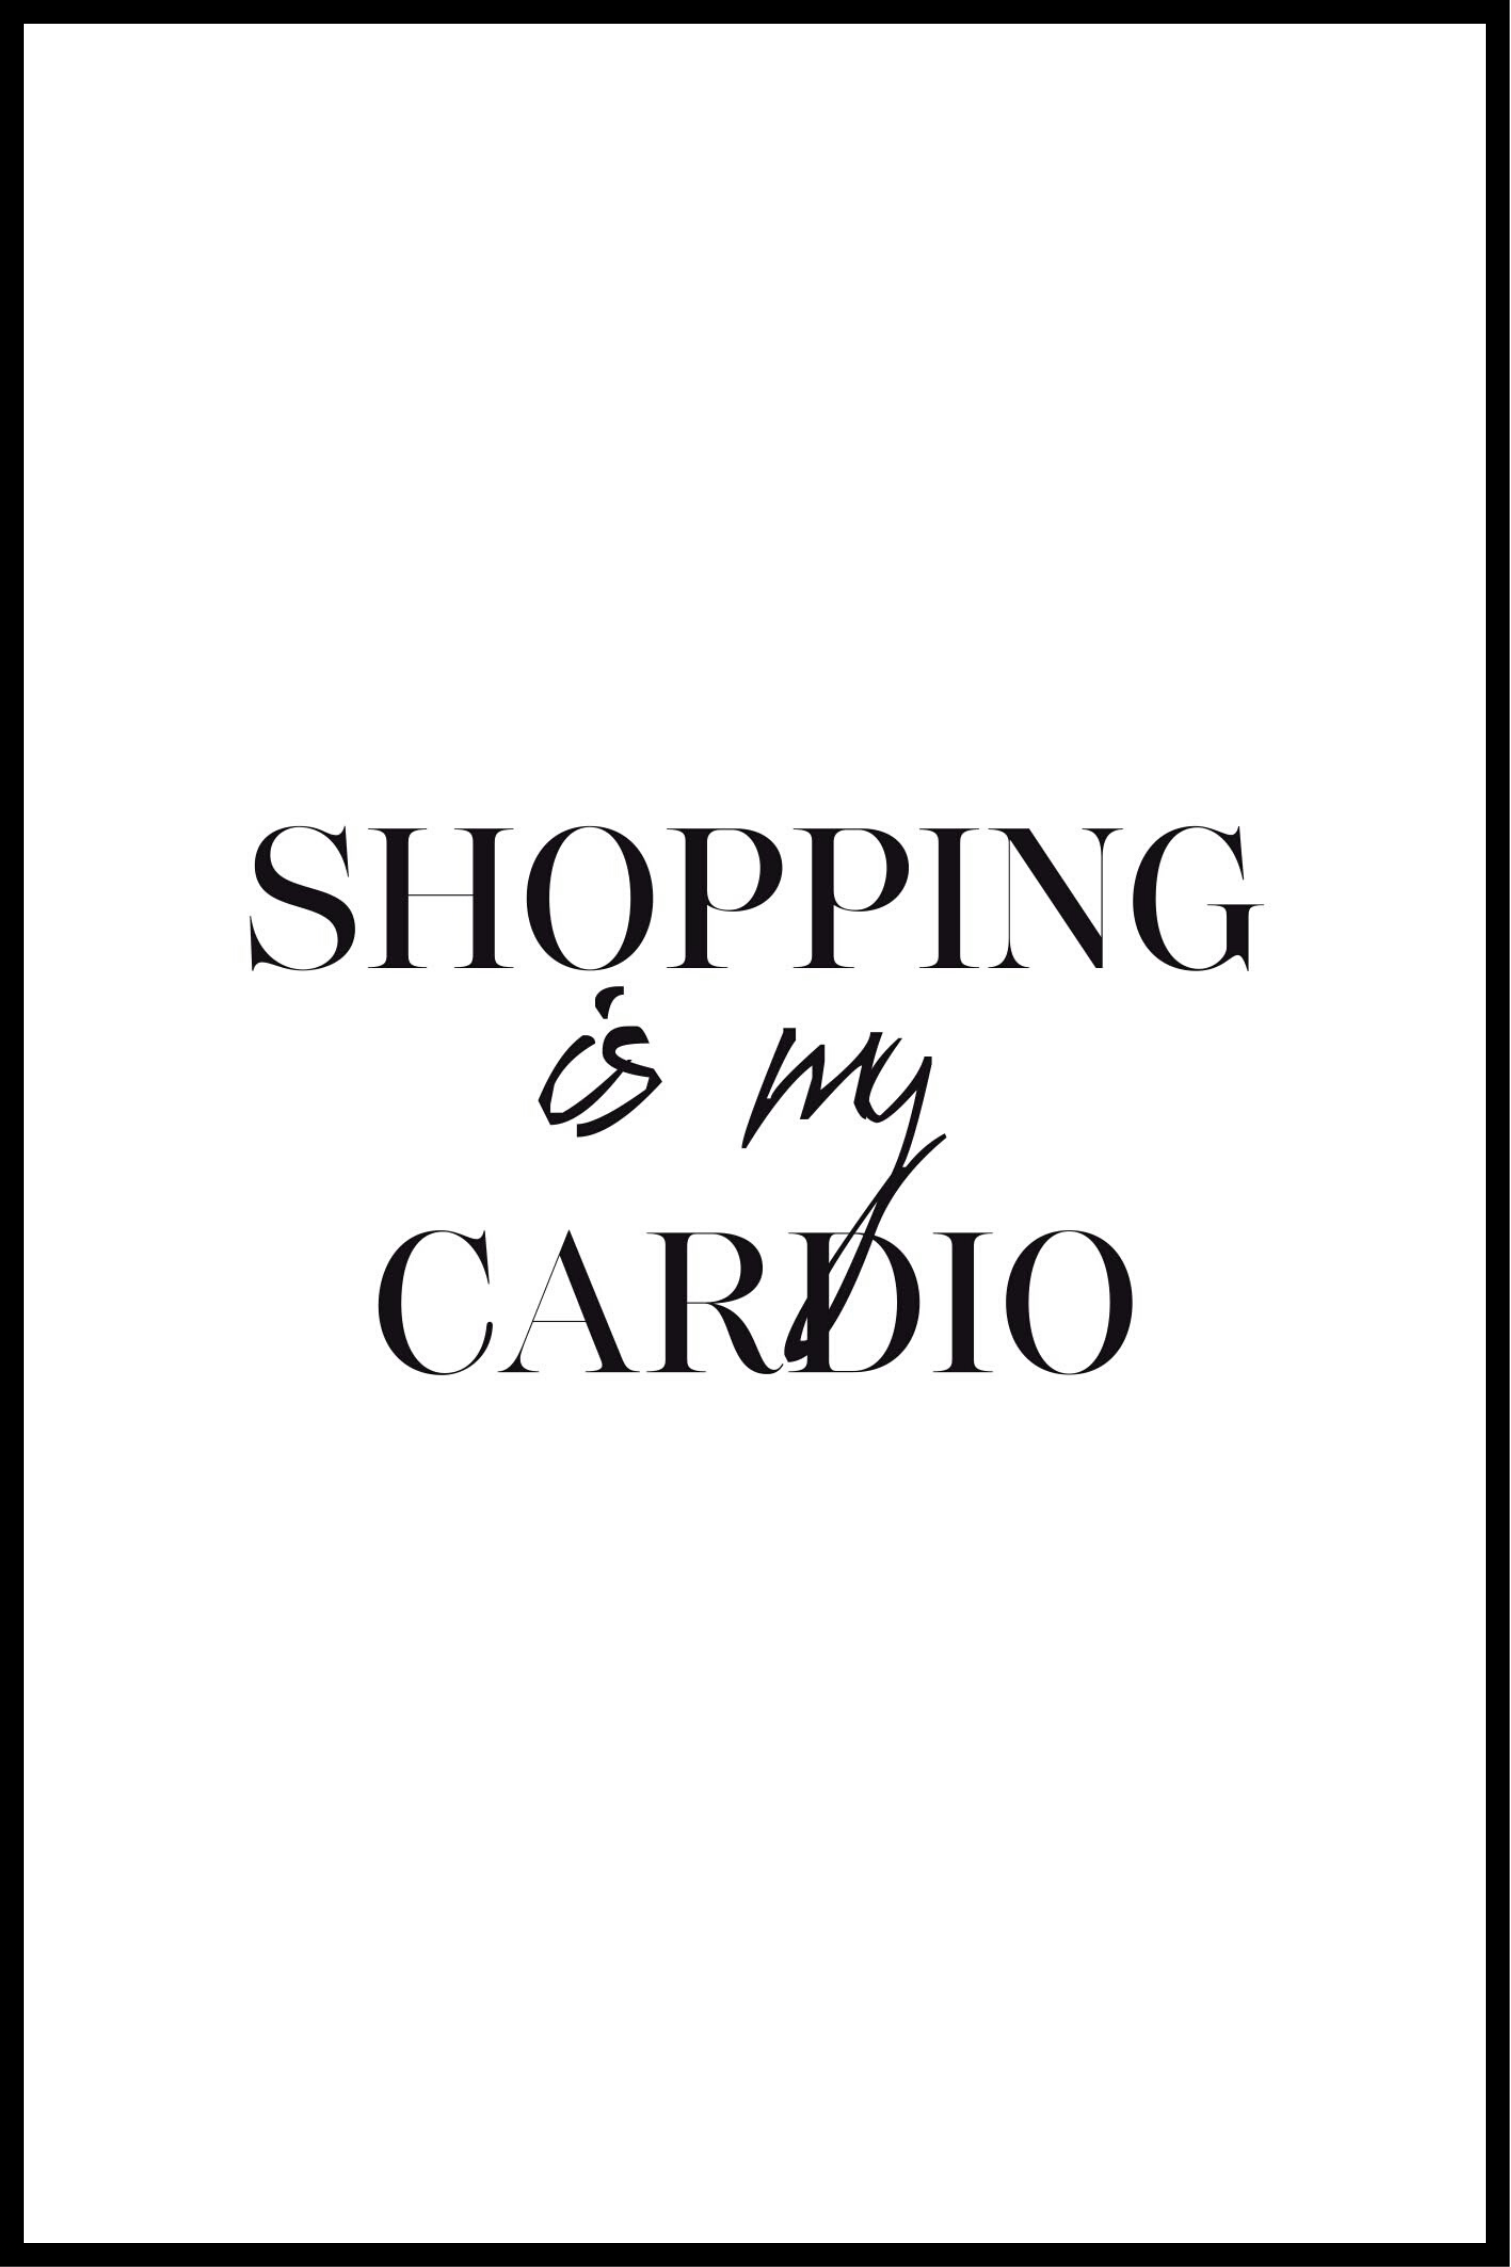 Shopping is my cardio plakat